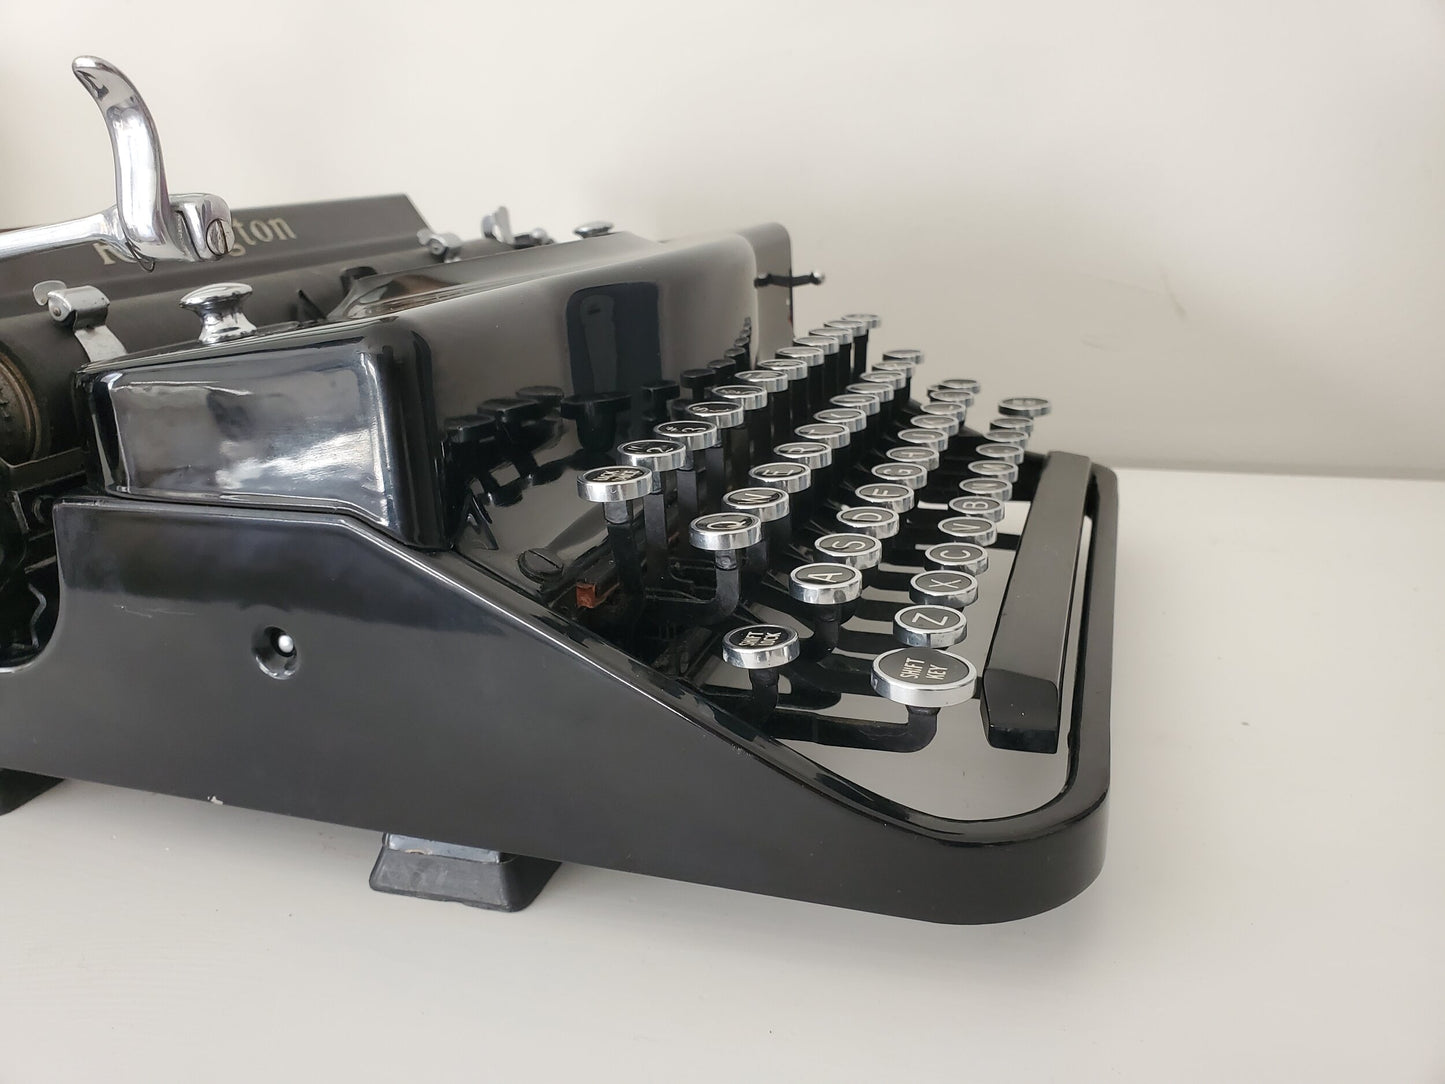 Circa 1938 Remington Model 1 'Noiseless' aka 'Speed' Working Typewriter with Case